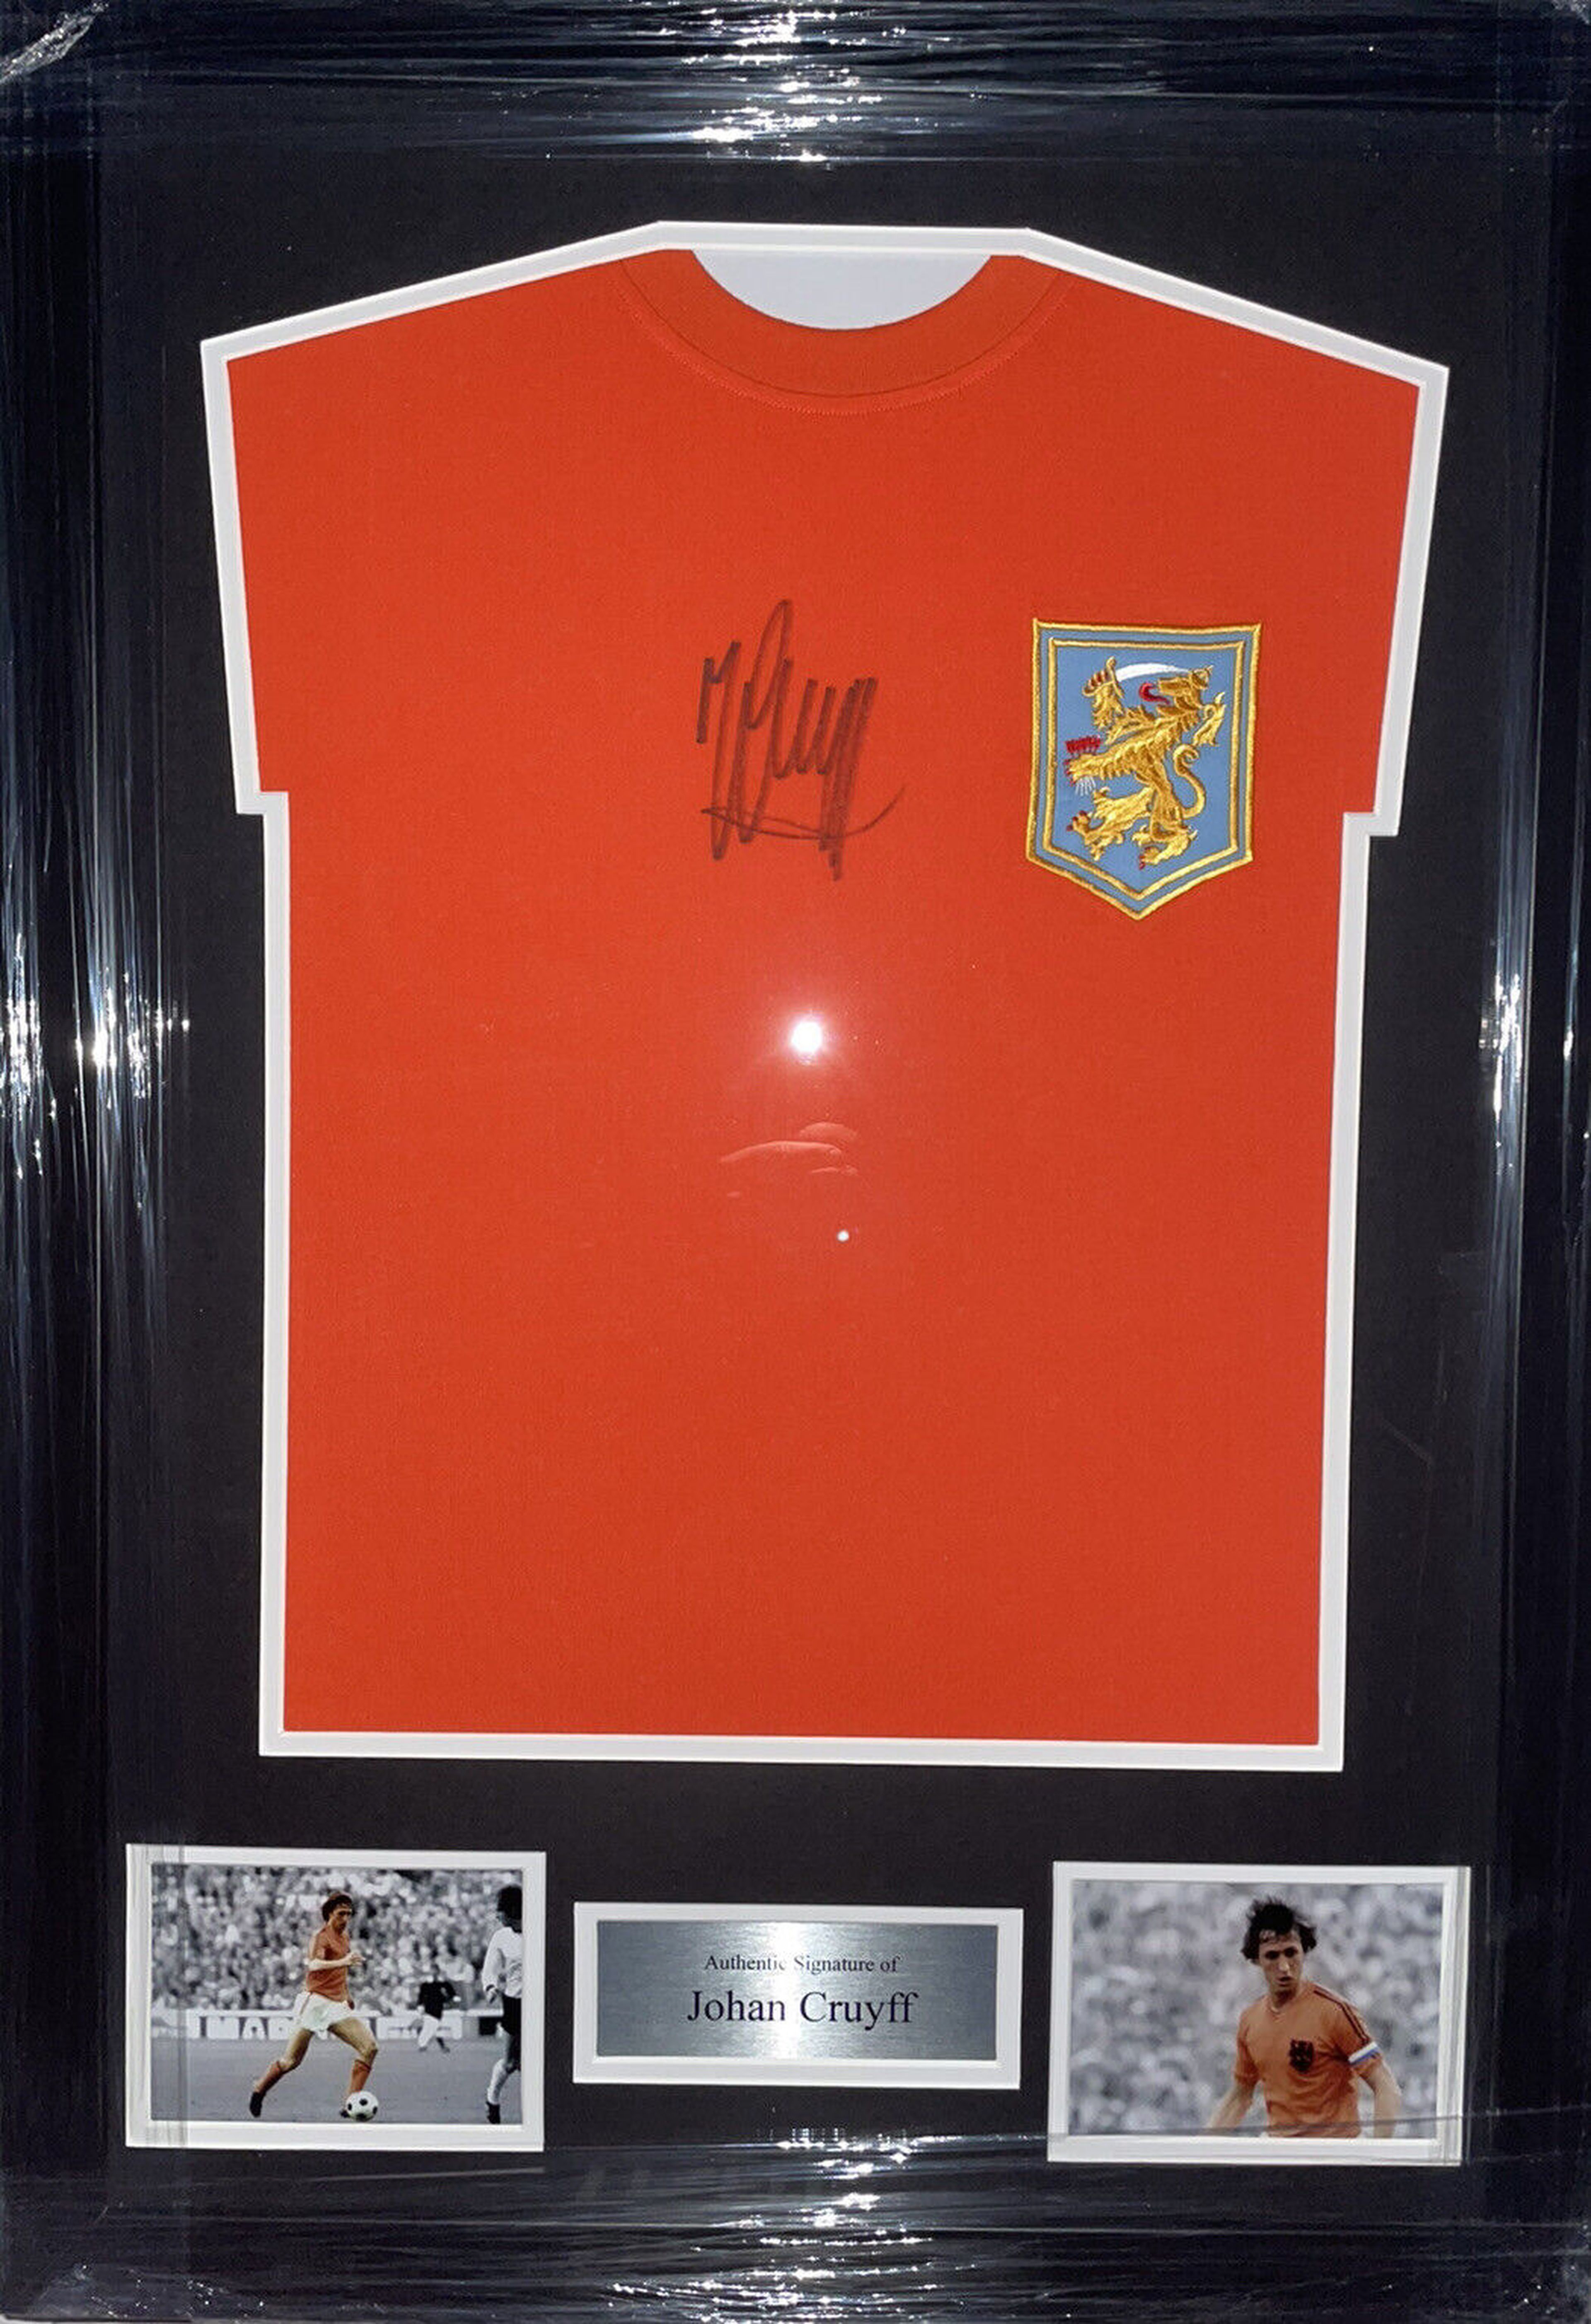 Camiseta firmada por Johan Cruyff.